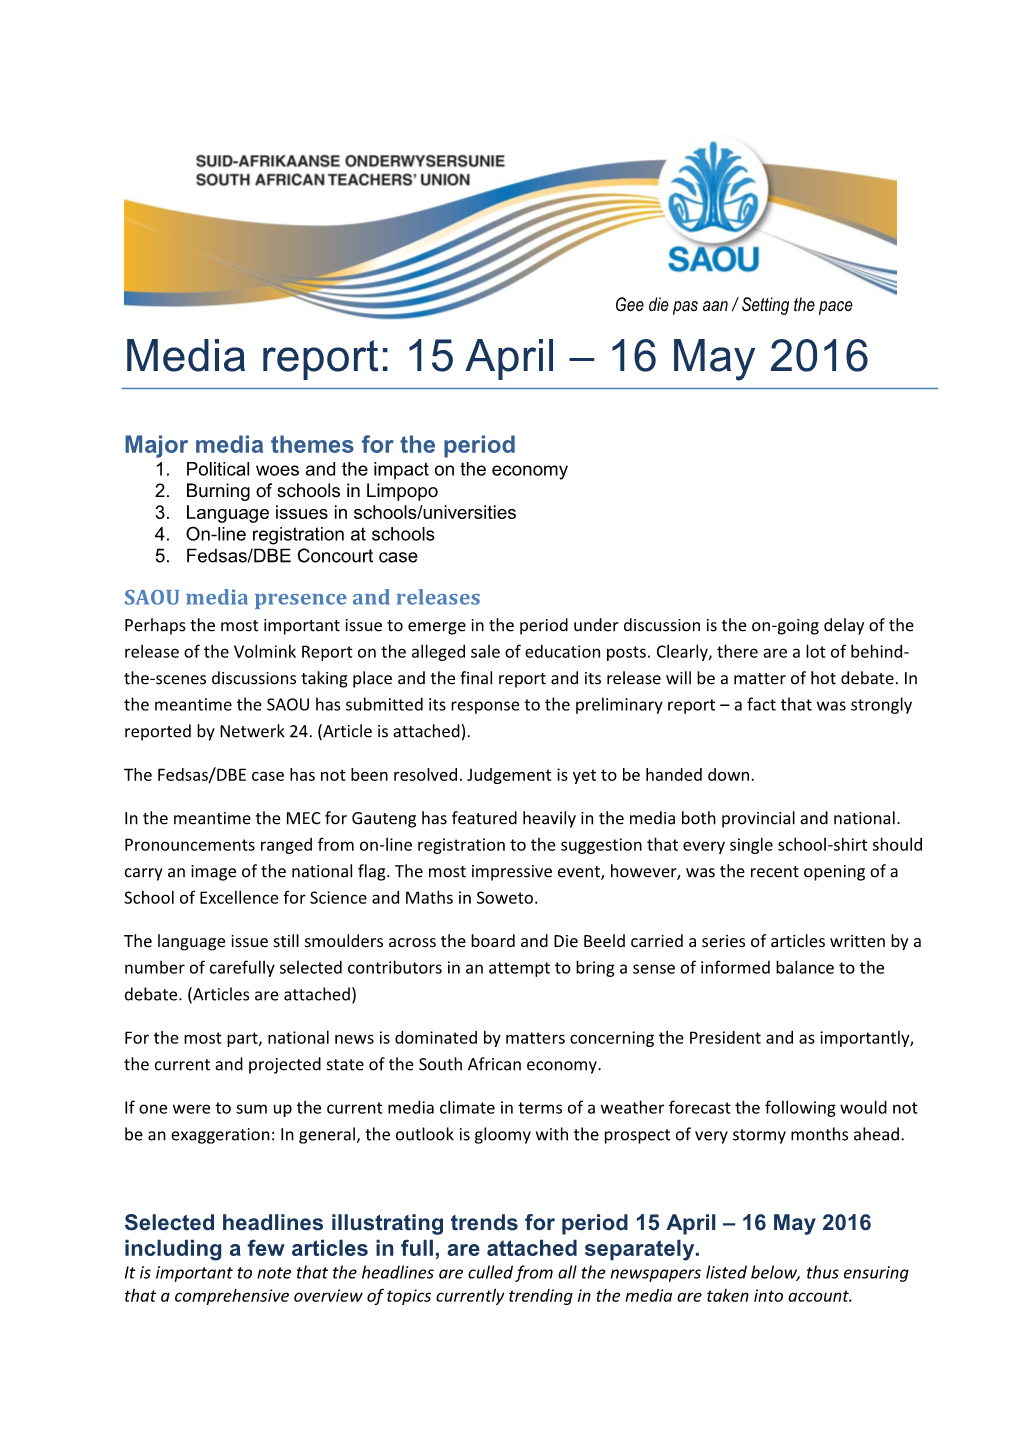 Media Report: 15 April – 16 May 2016